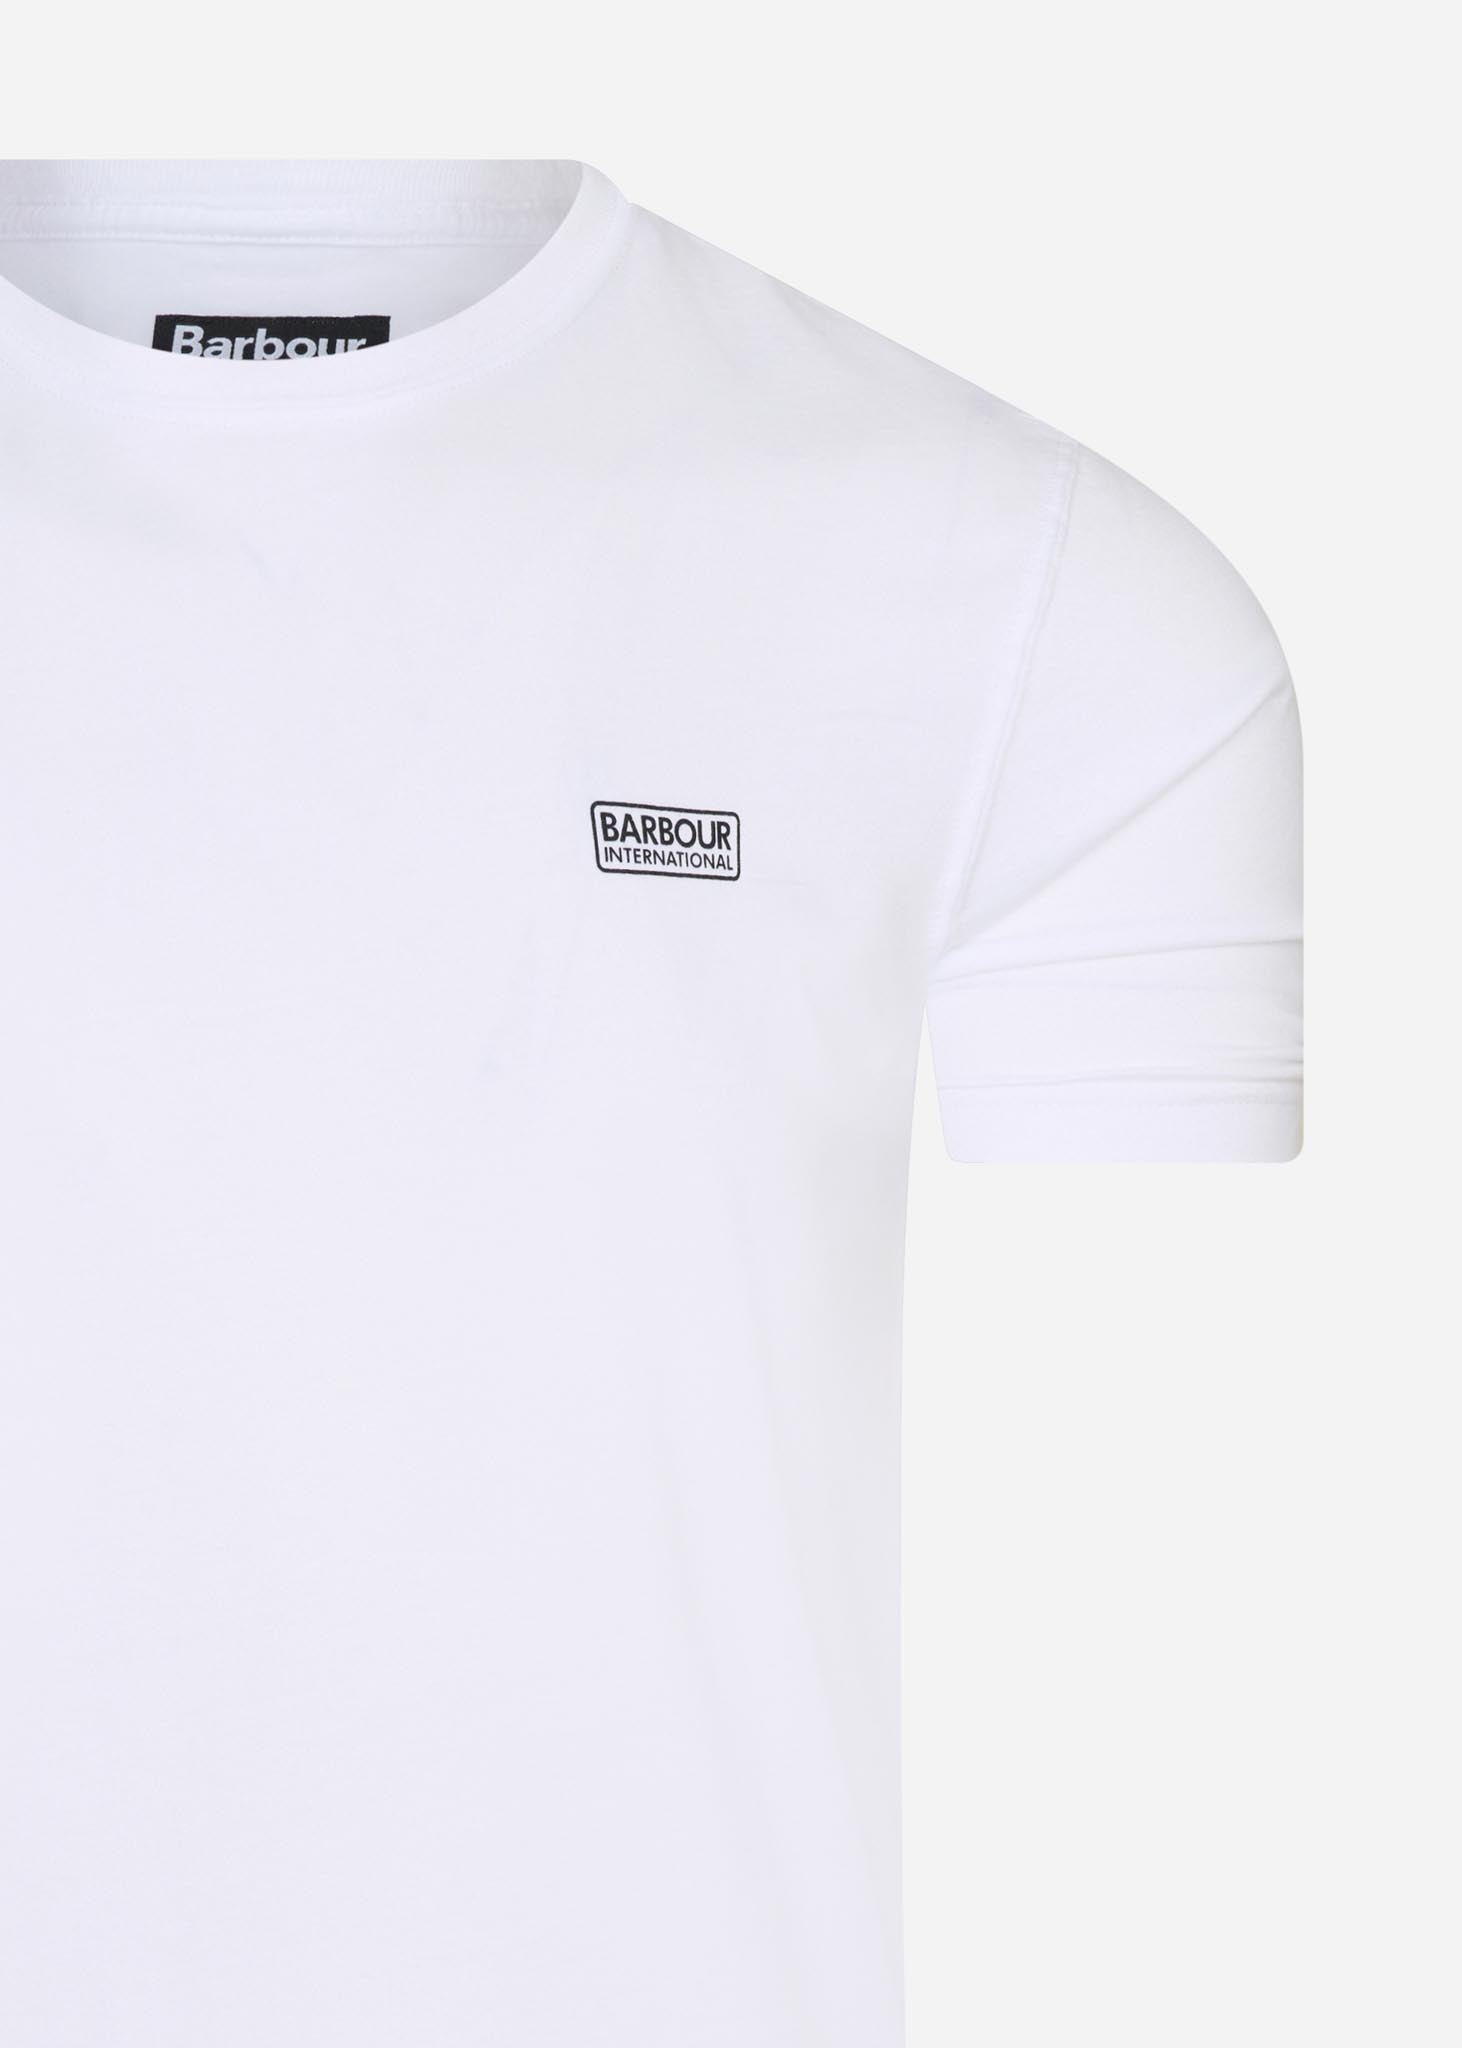 barbour international t-shirt wit